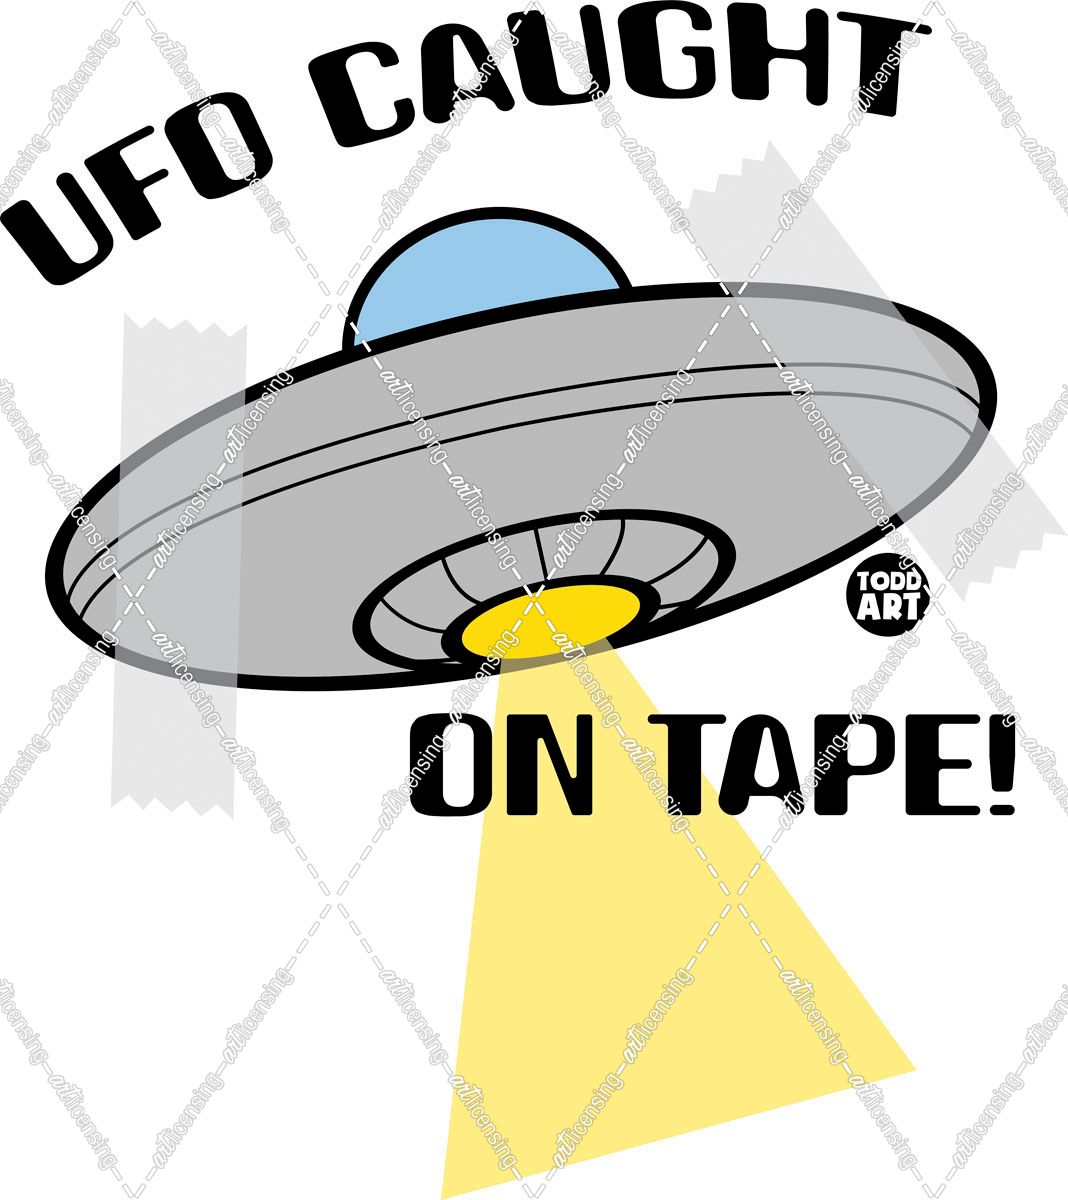 UFO Caught On Tape